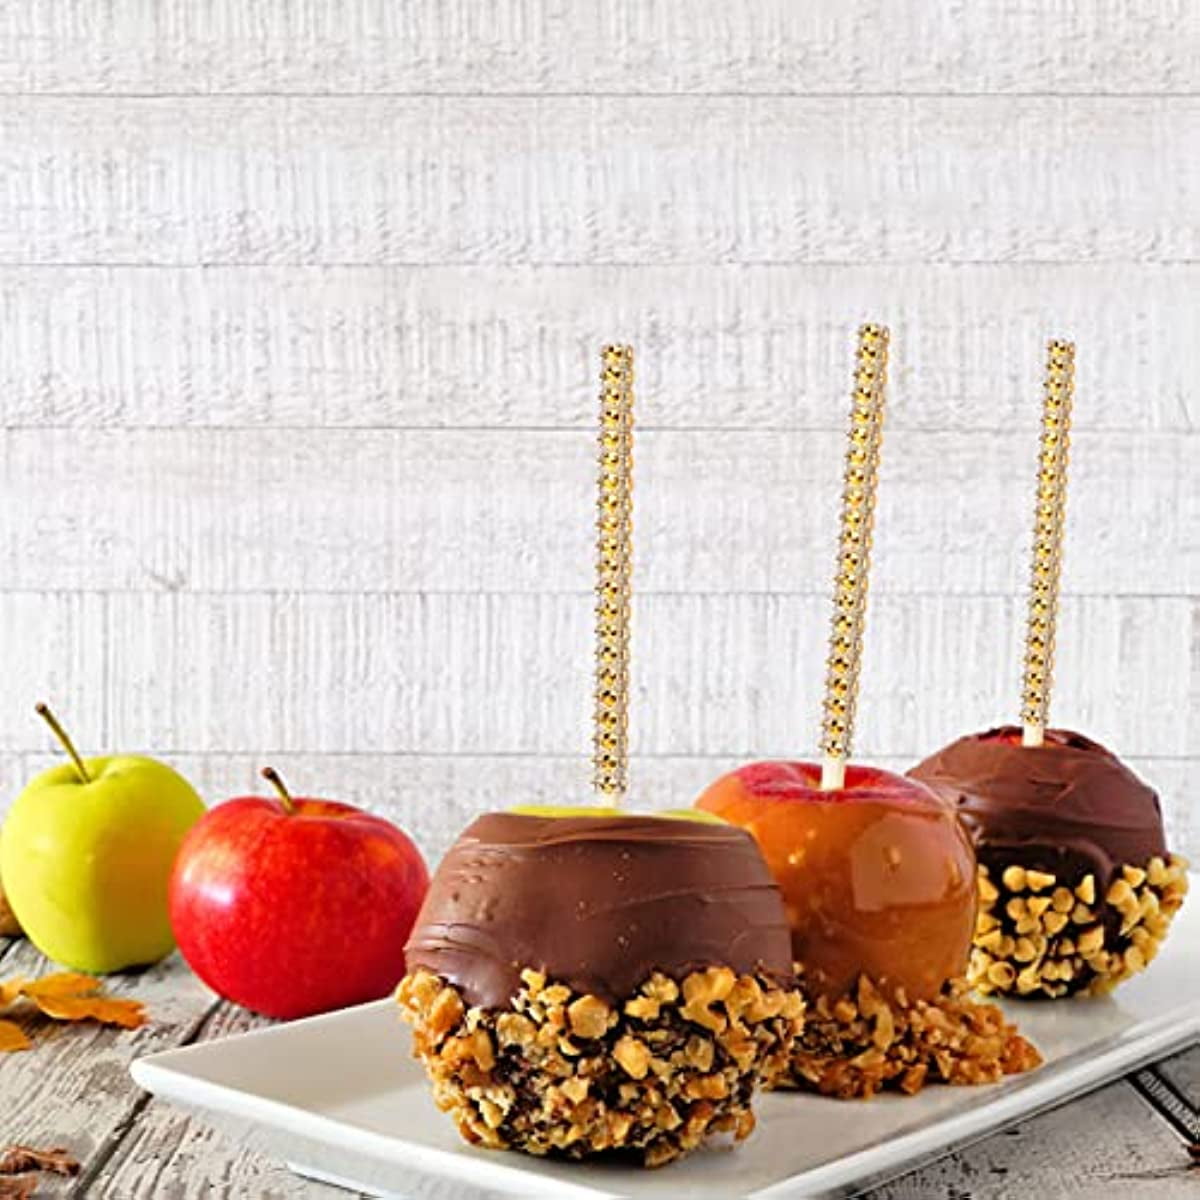 12 Pcs Rhinestone Bling Bamboo Candy Apple Sticks for Gold Cake